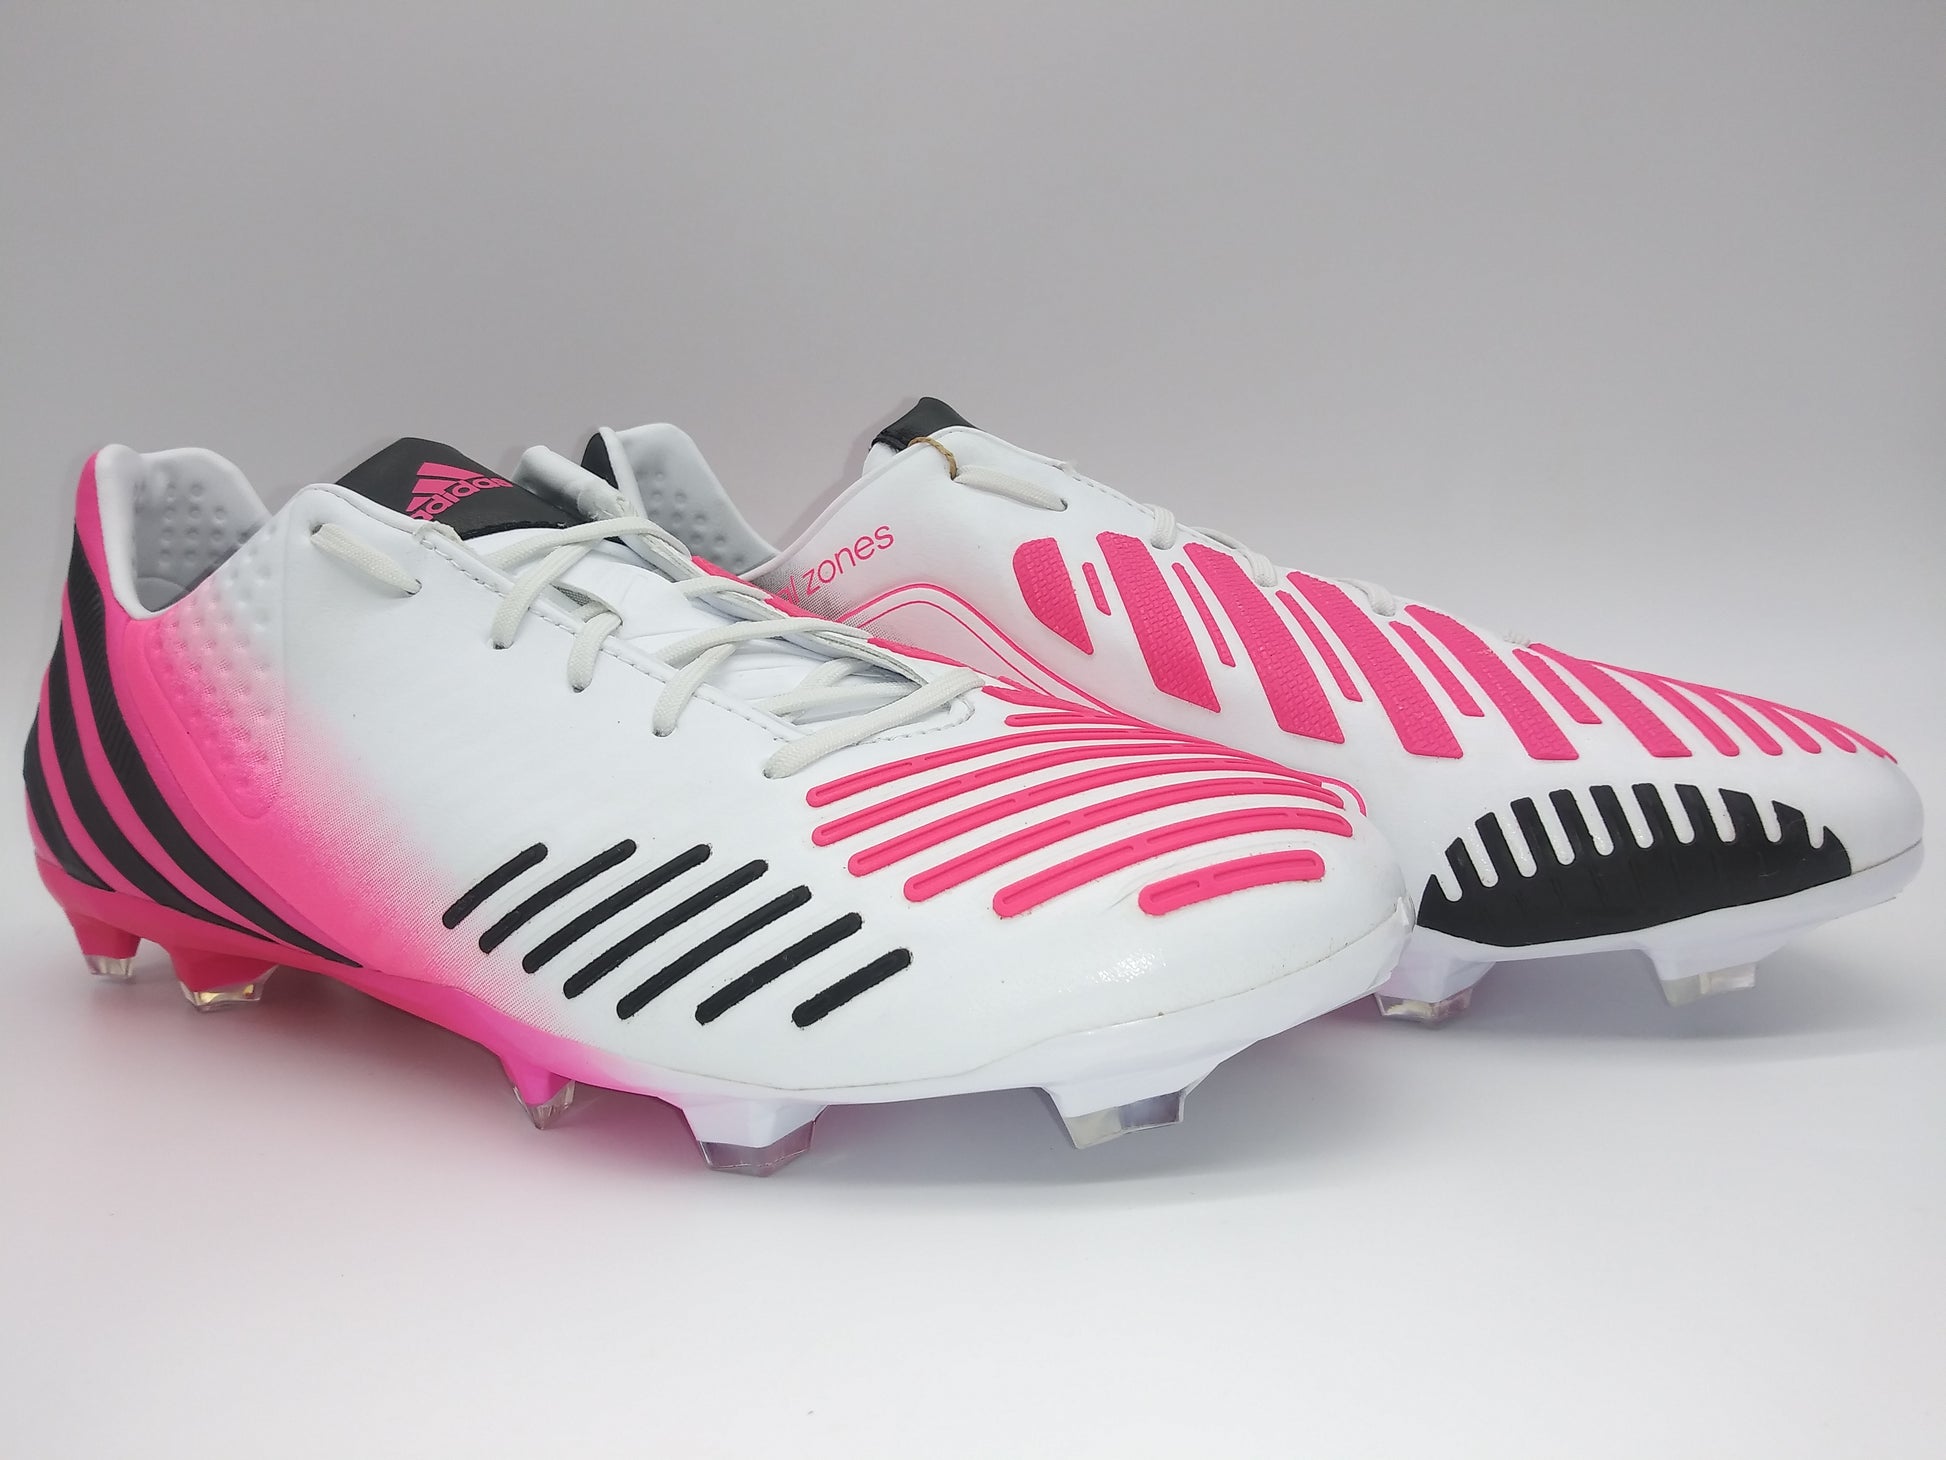 Adidas LZ I FG White Pink Villegas